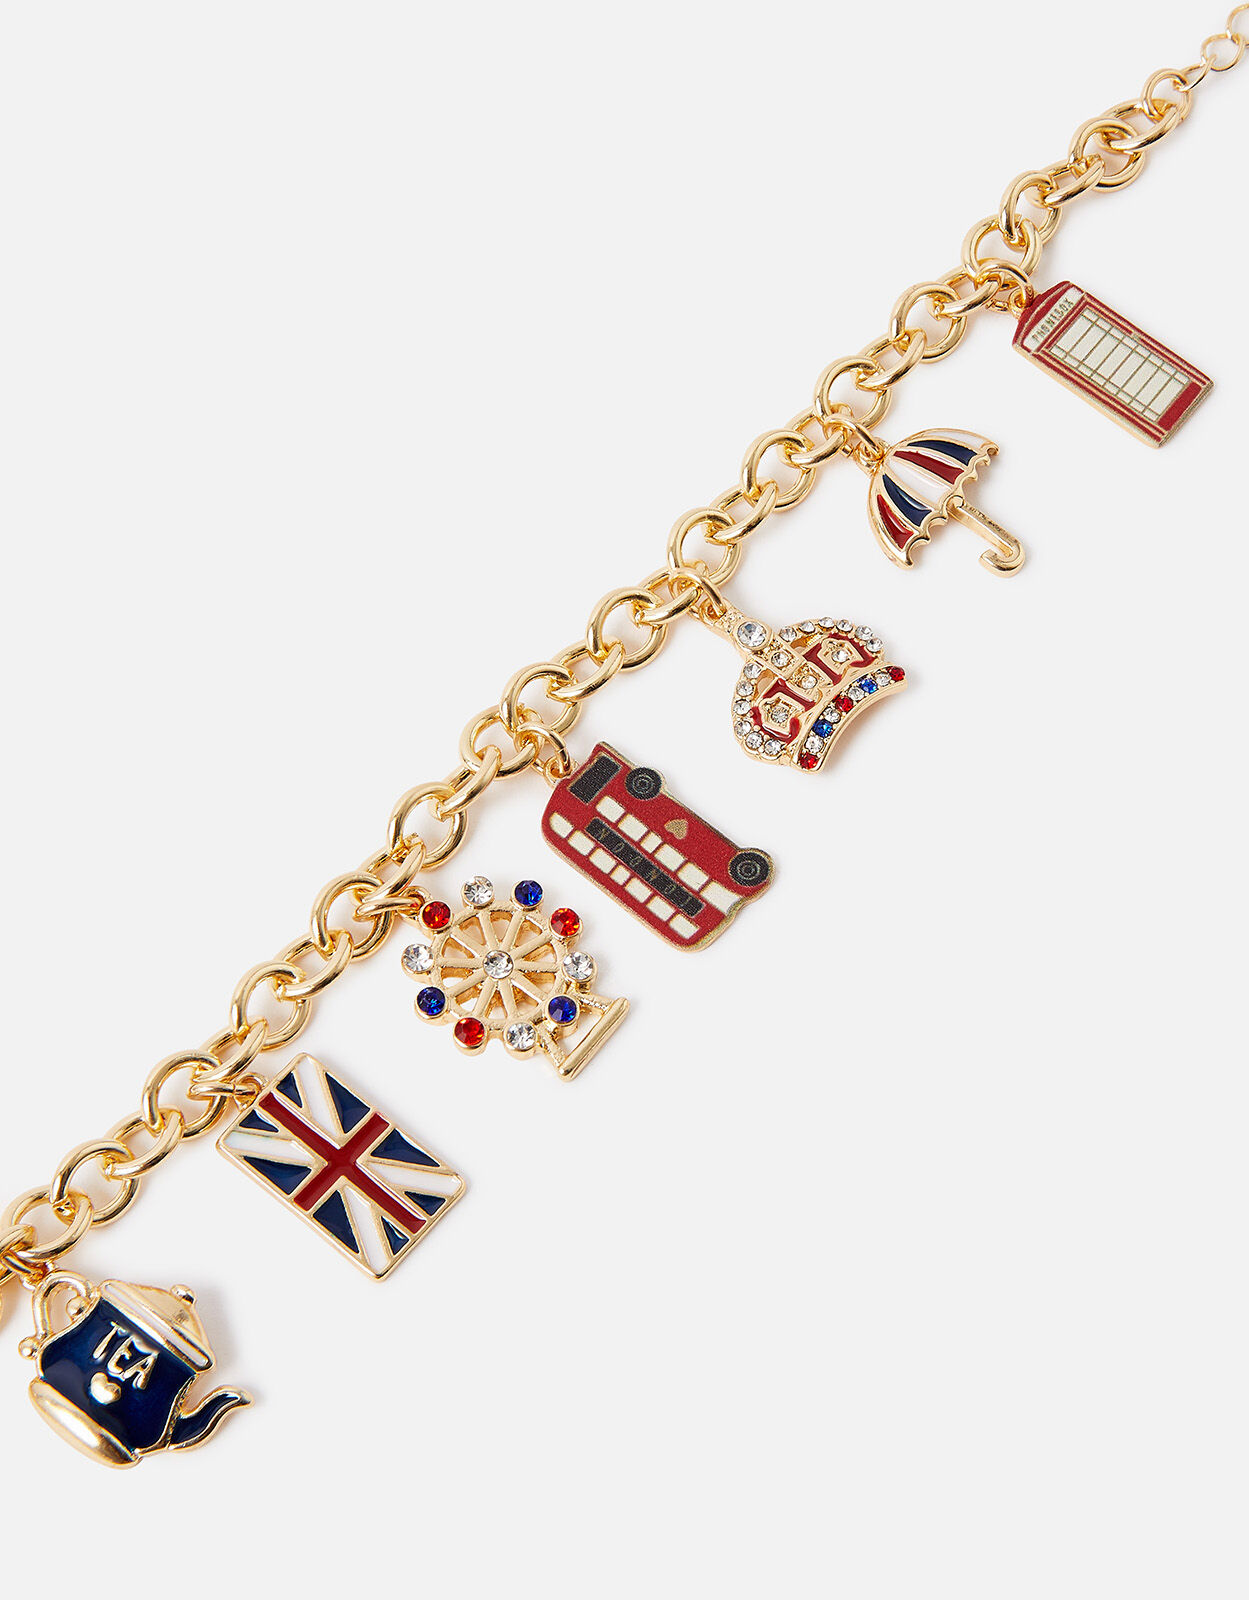 Carlton London Girls Set of 4 Multicoloured GoldPlated Charm Bracelet   Carlton London Online